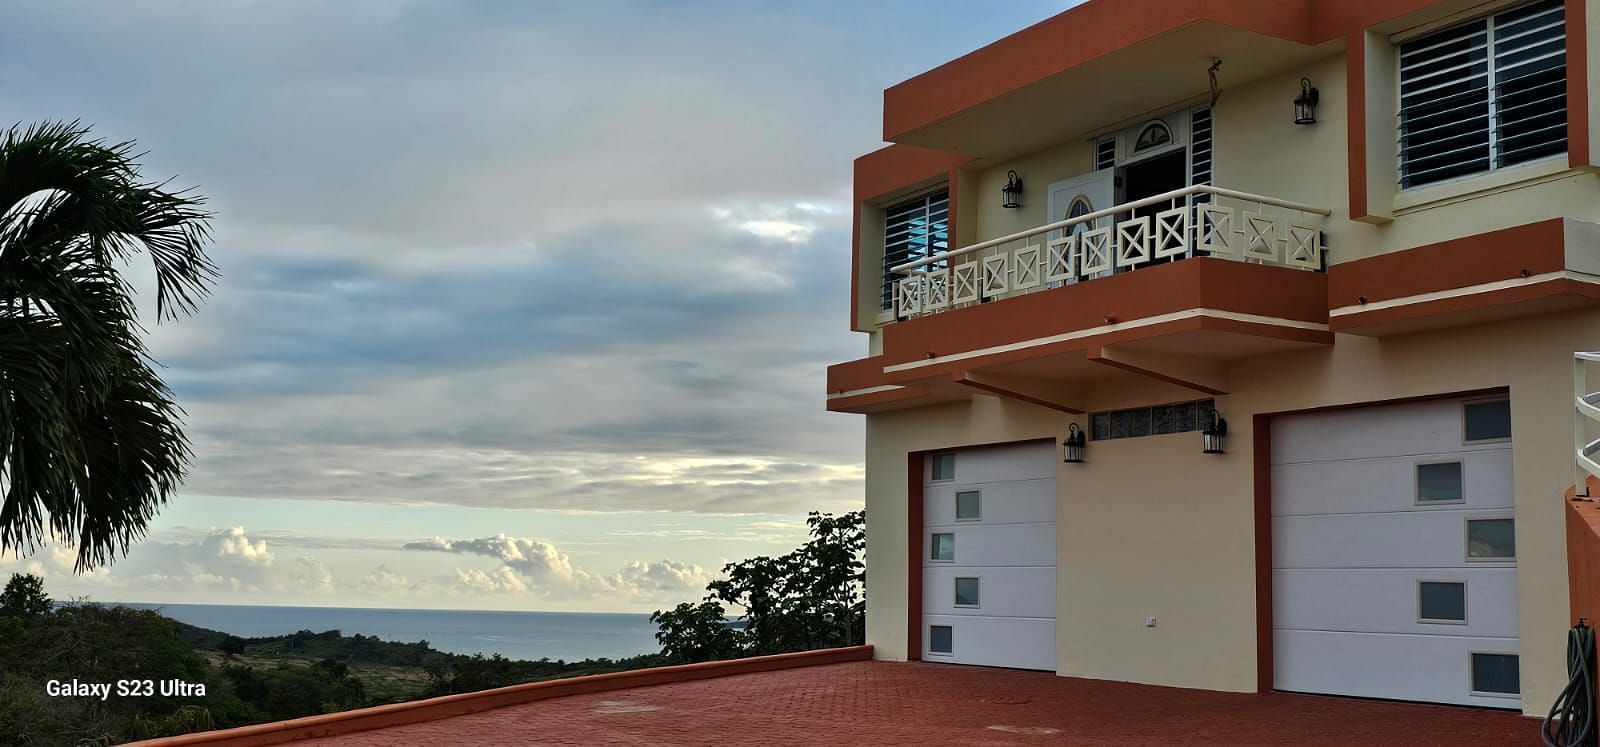 JWguest House at Palmas del Mar, Humacao | Island home with breathtaking views - PuraVida | Jwbnb no brobnb 1